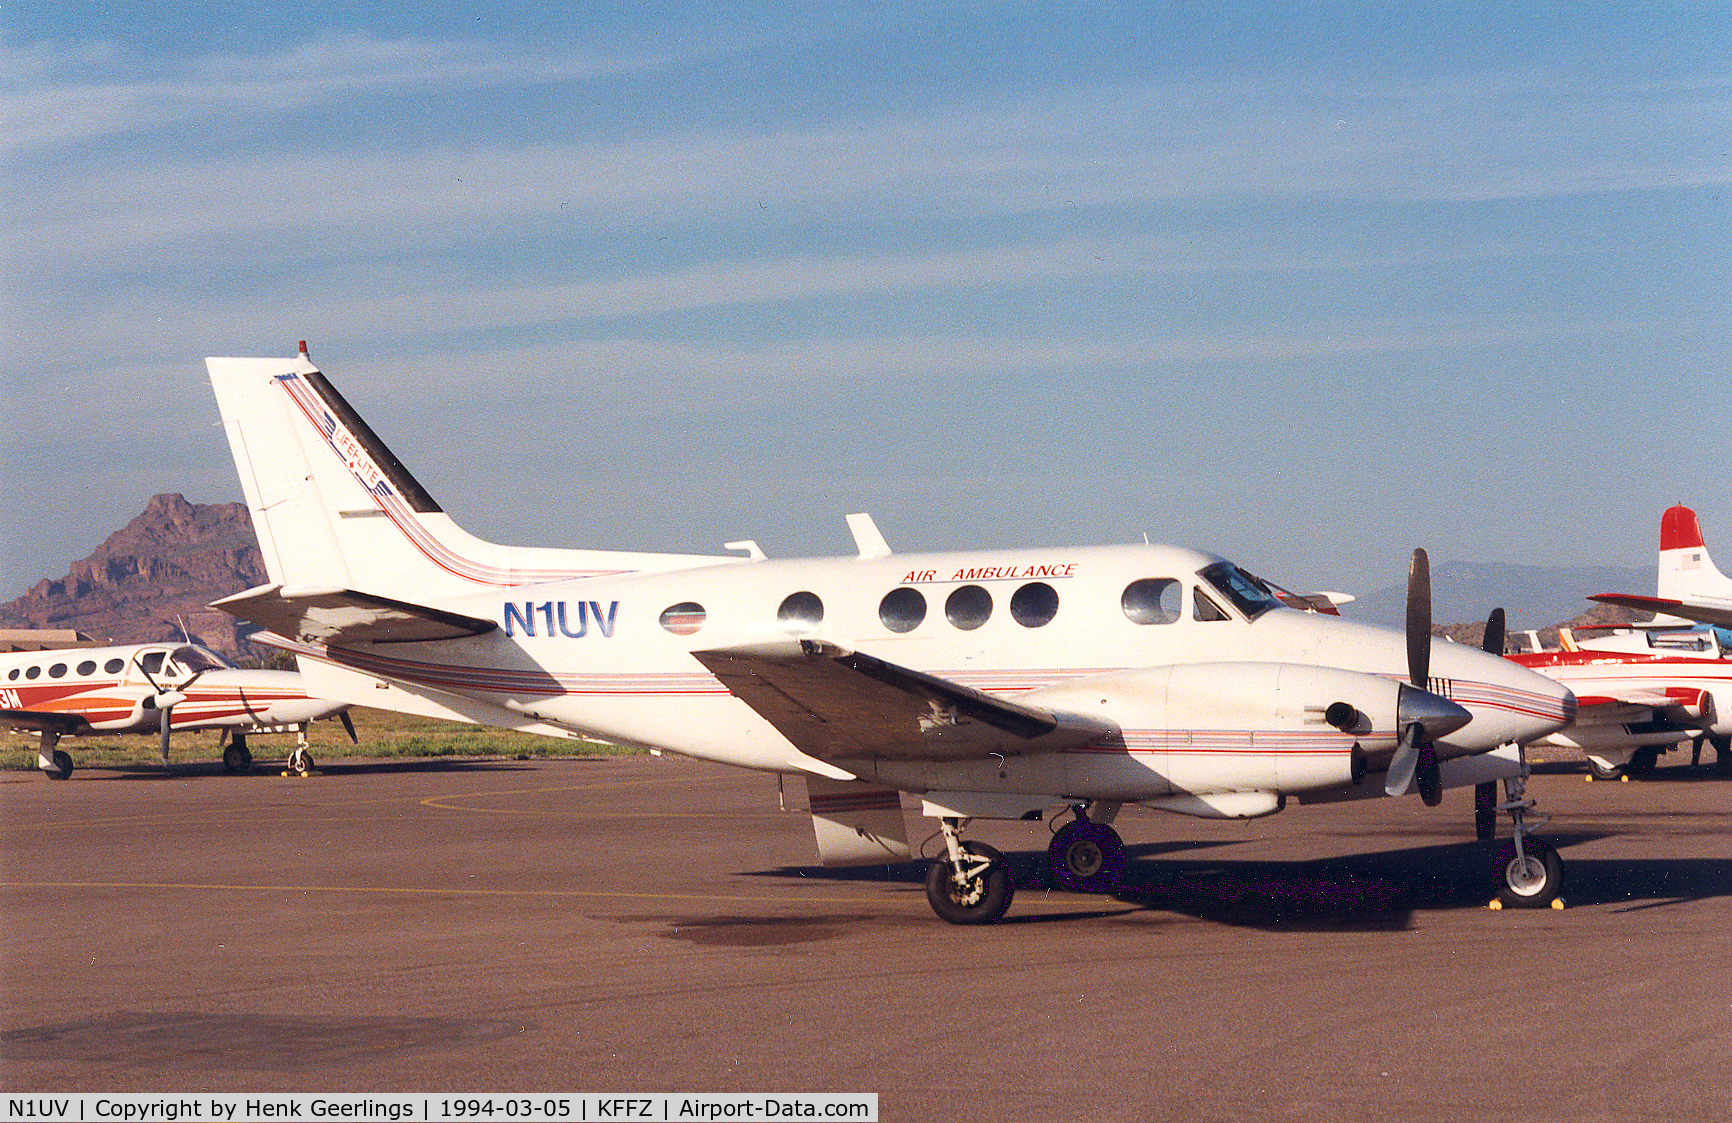 N1UV, 1971 Beech C90 King Air C/N LJ-511, Air Ambulance - Lifeflite